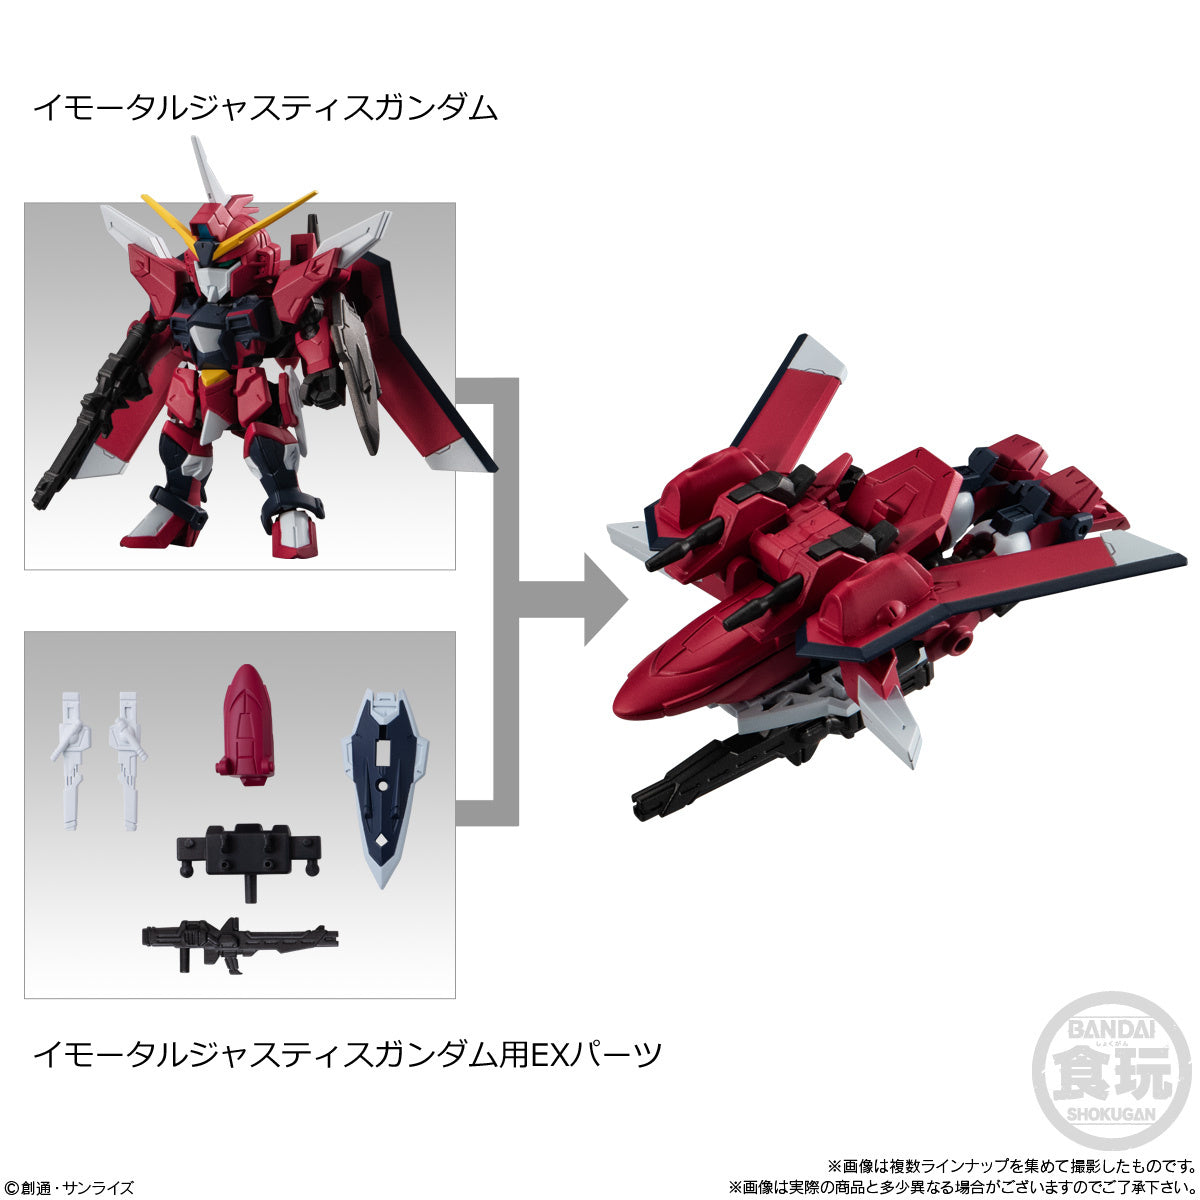 Bandai - Shokugan - Mobile Suit Gundam - Mobility Joint Gundam Vol. 7 (Box of 10) - Marvelous Toys